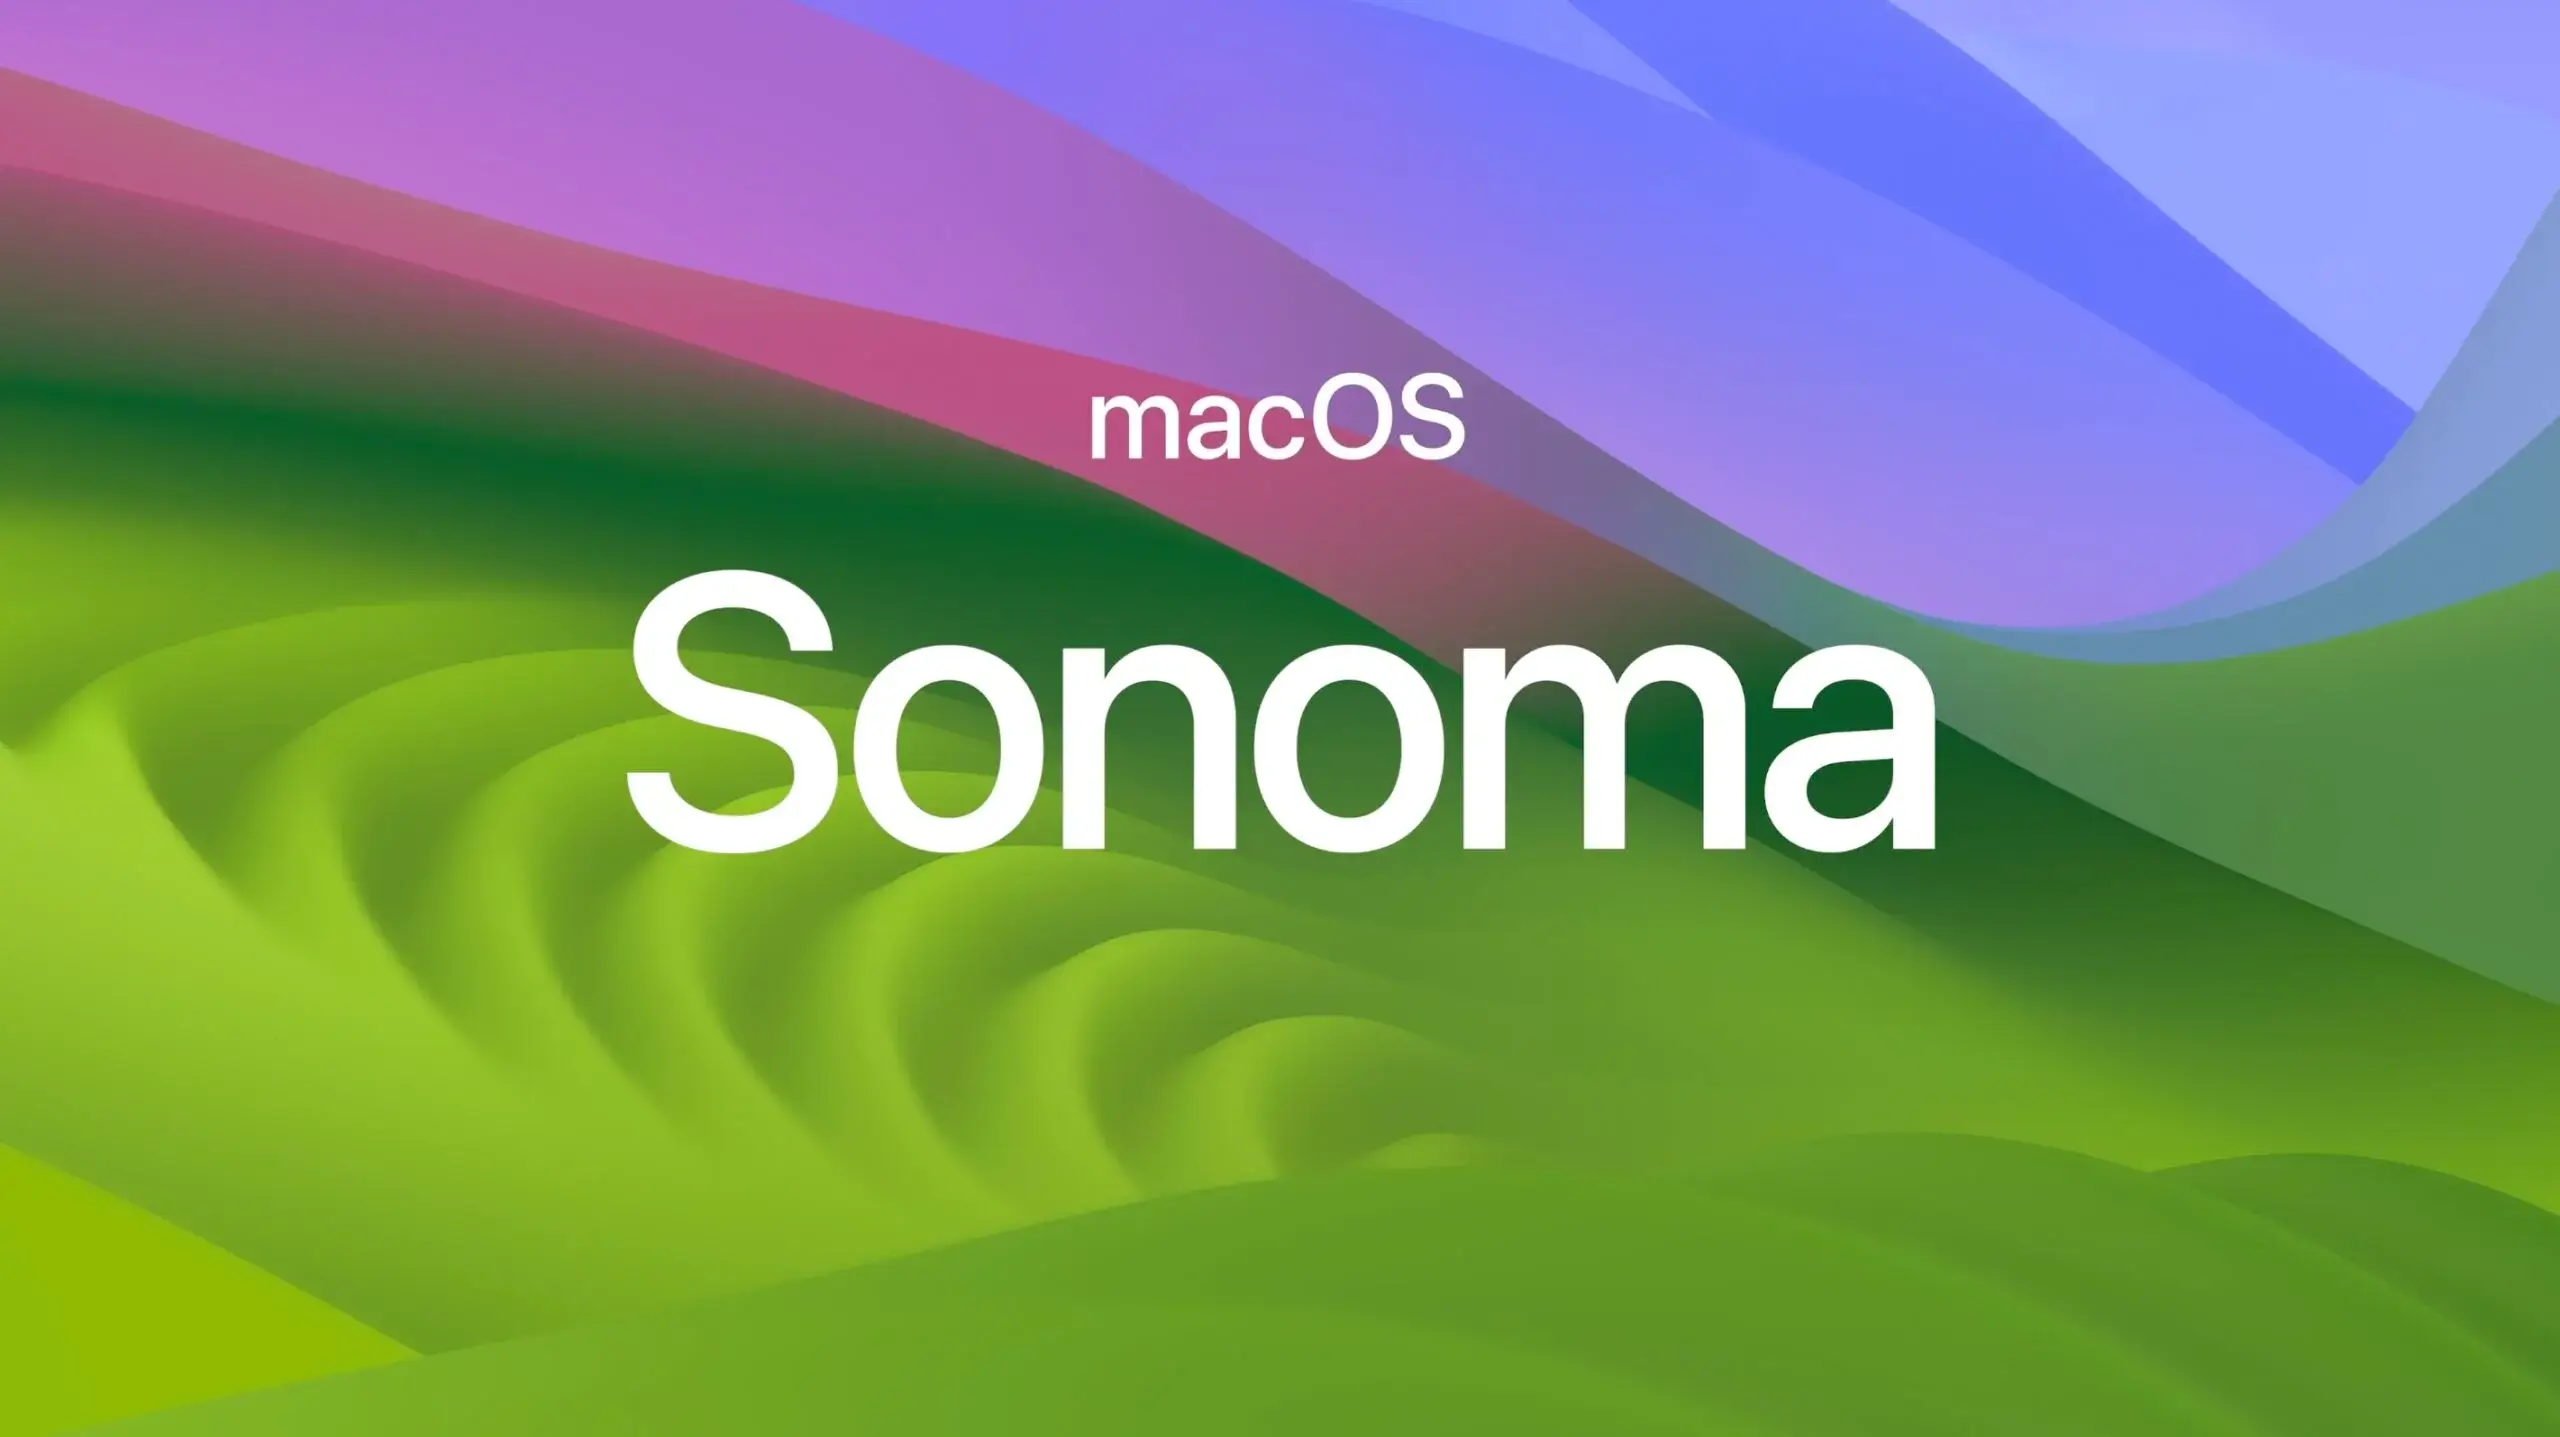 macOS Sonoma 使用心得及总结